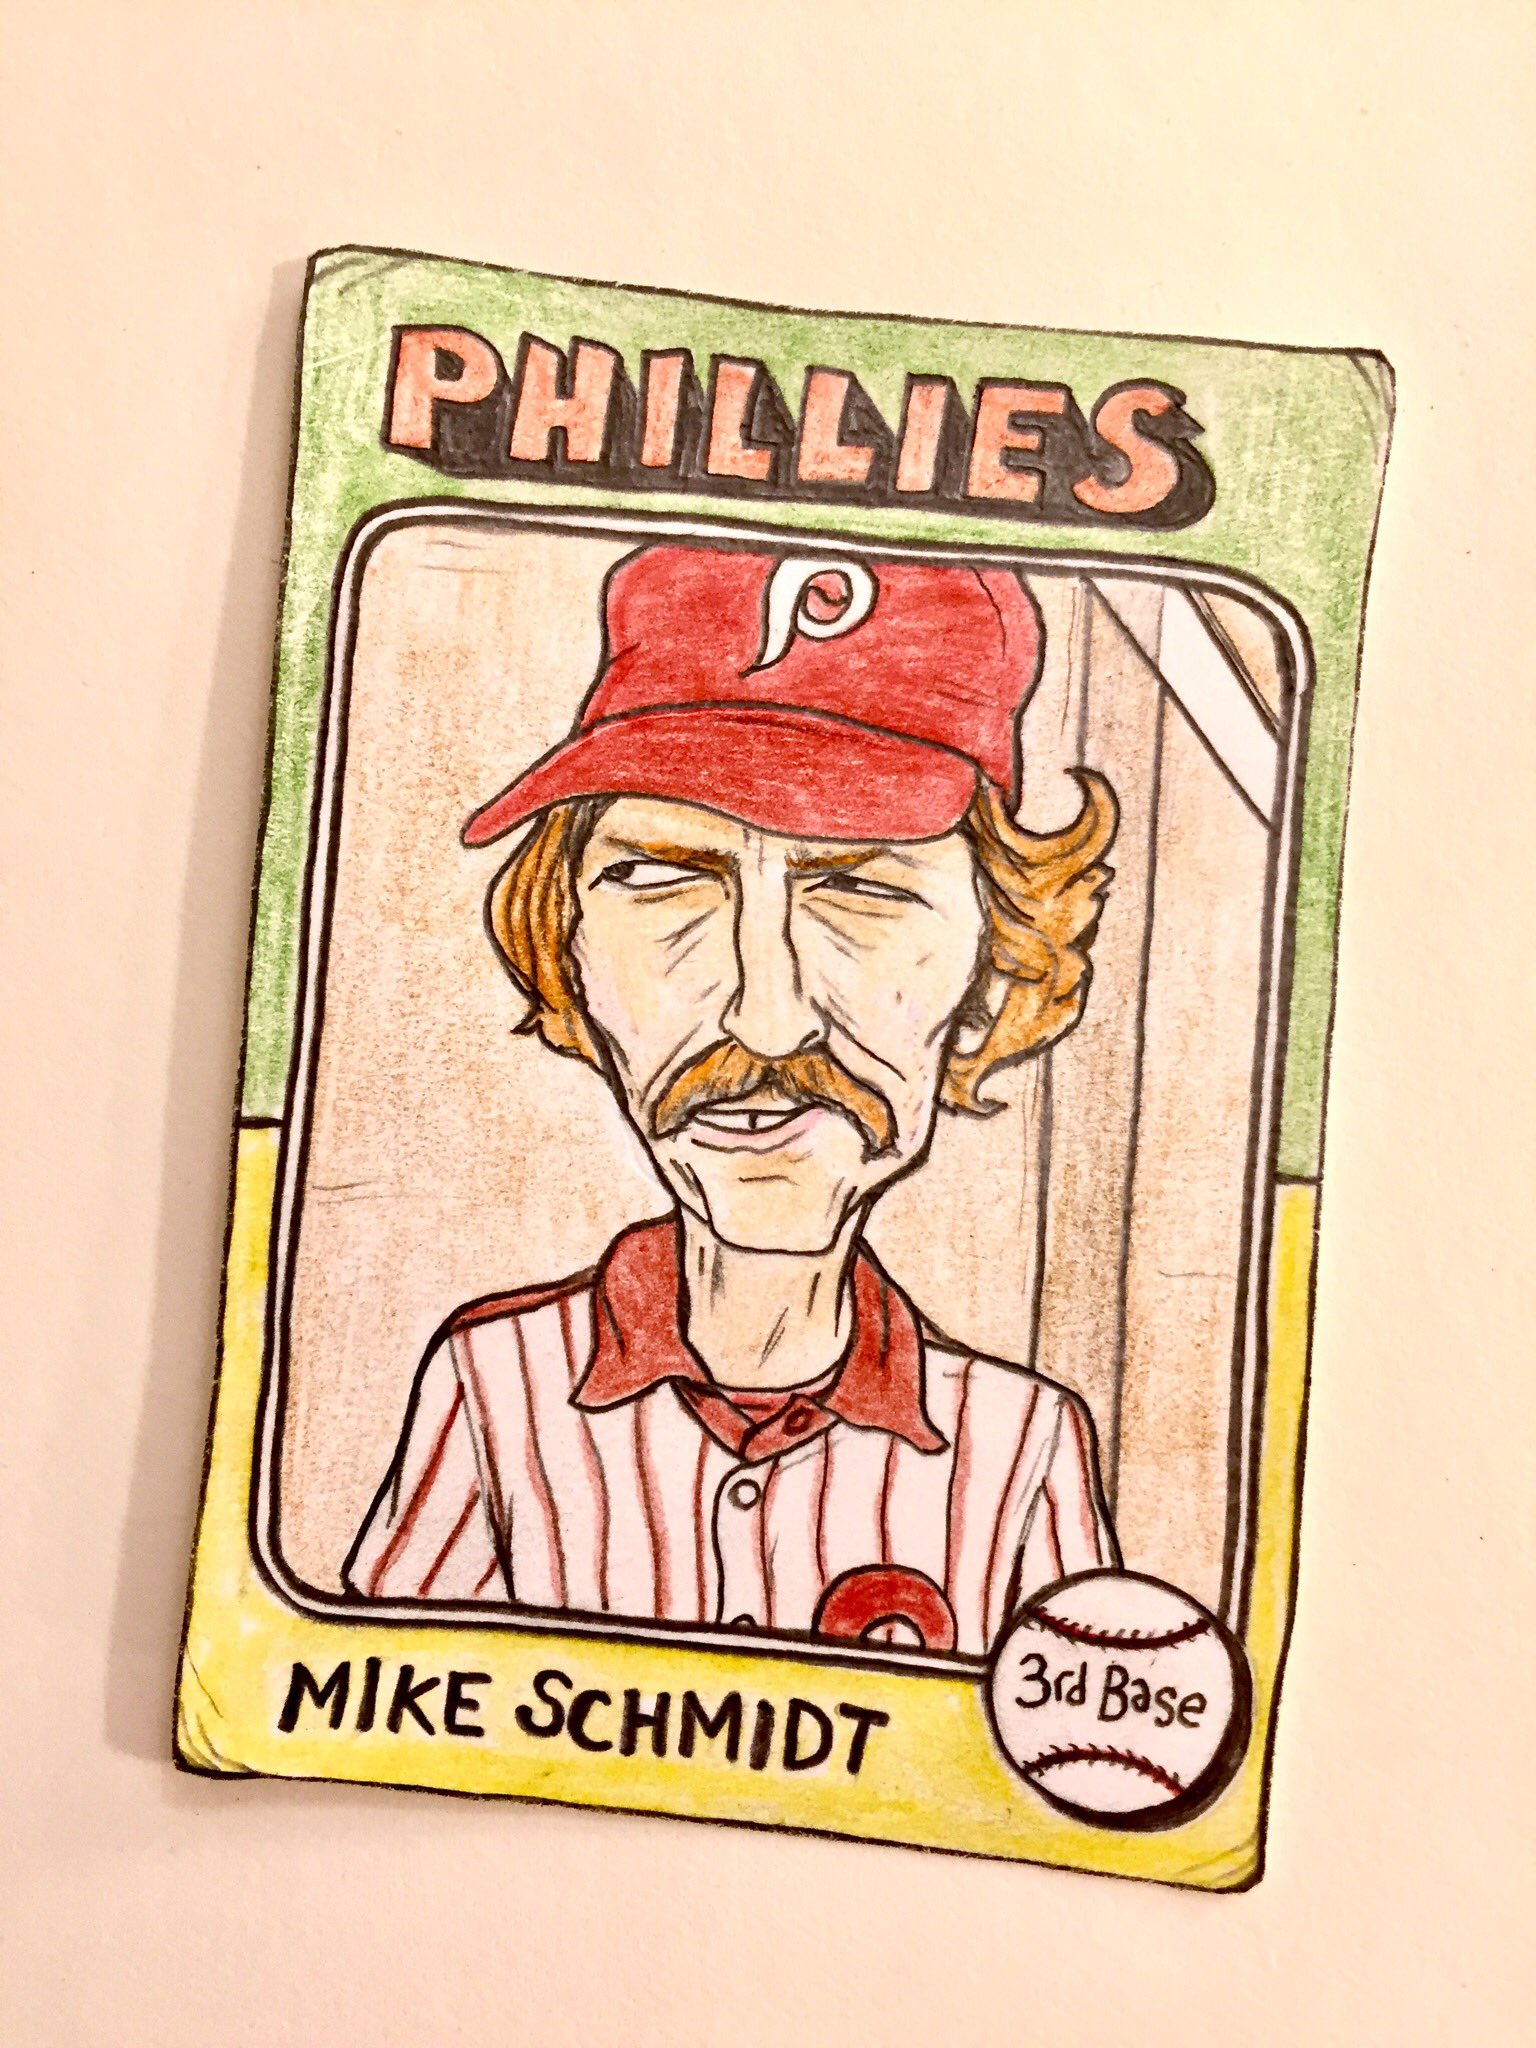 Happy birthday, Mike Schmidt! 